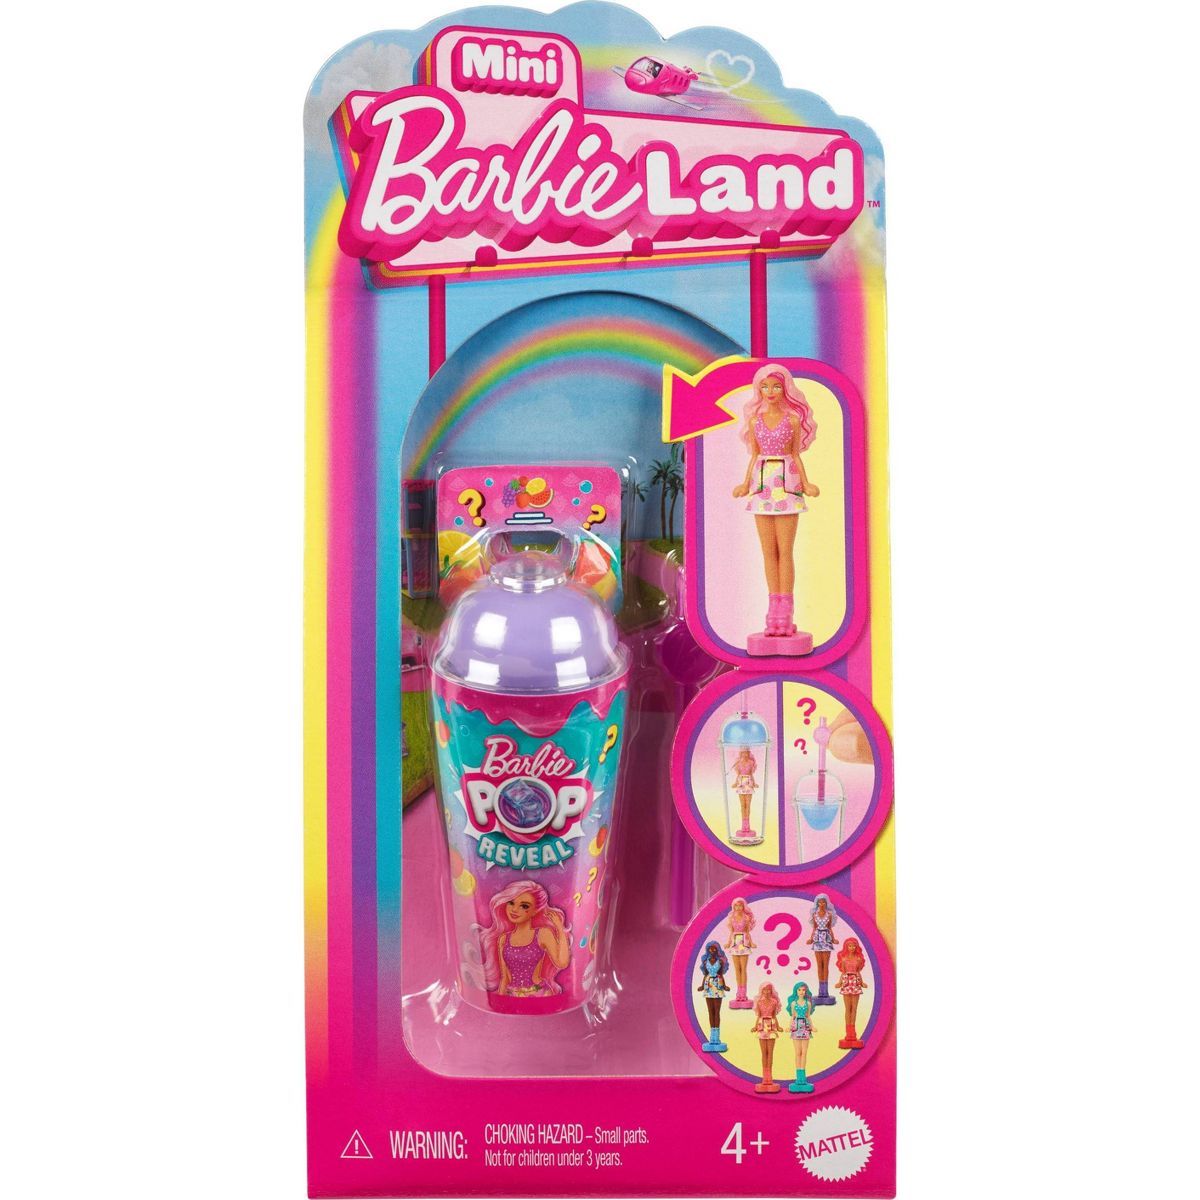 Barbie Land 6" Mini Pop Reveal Doll | Target